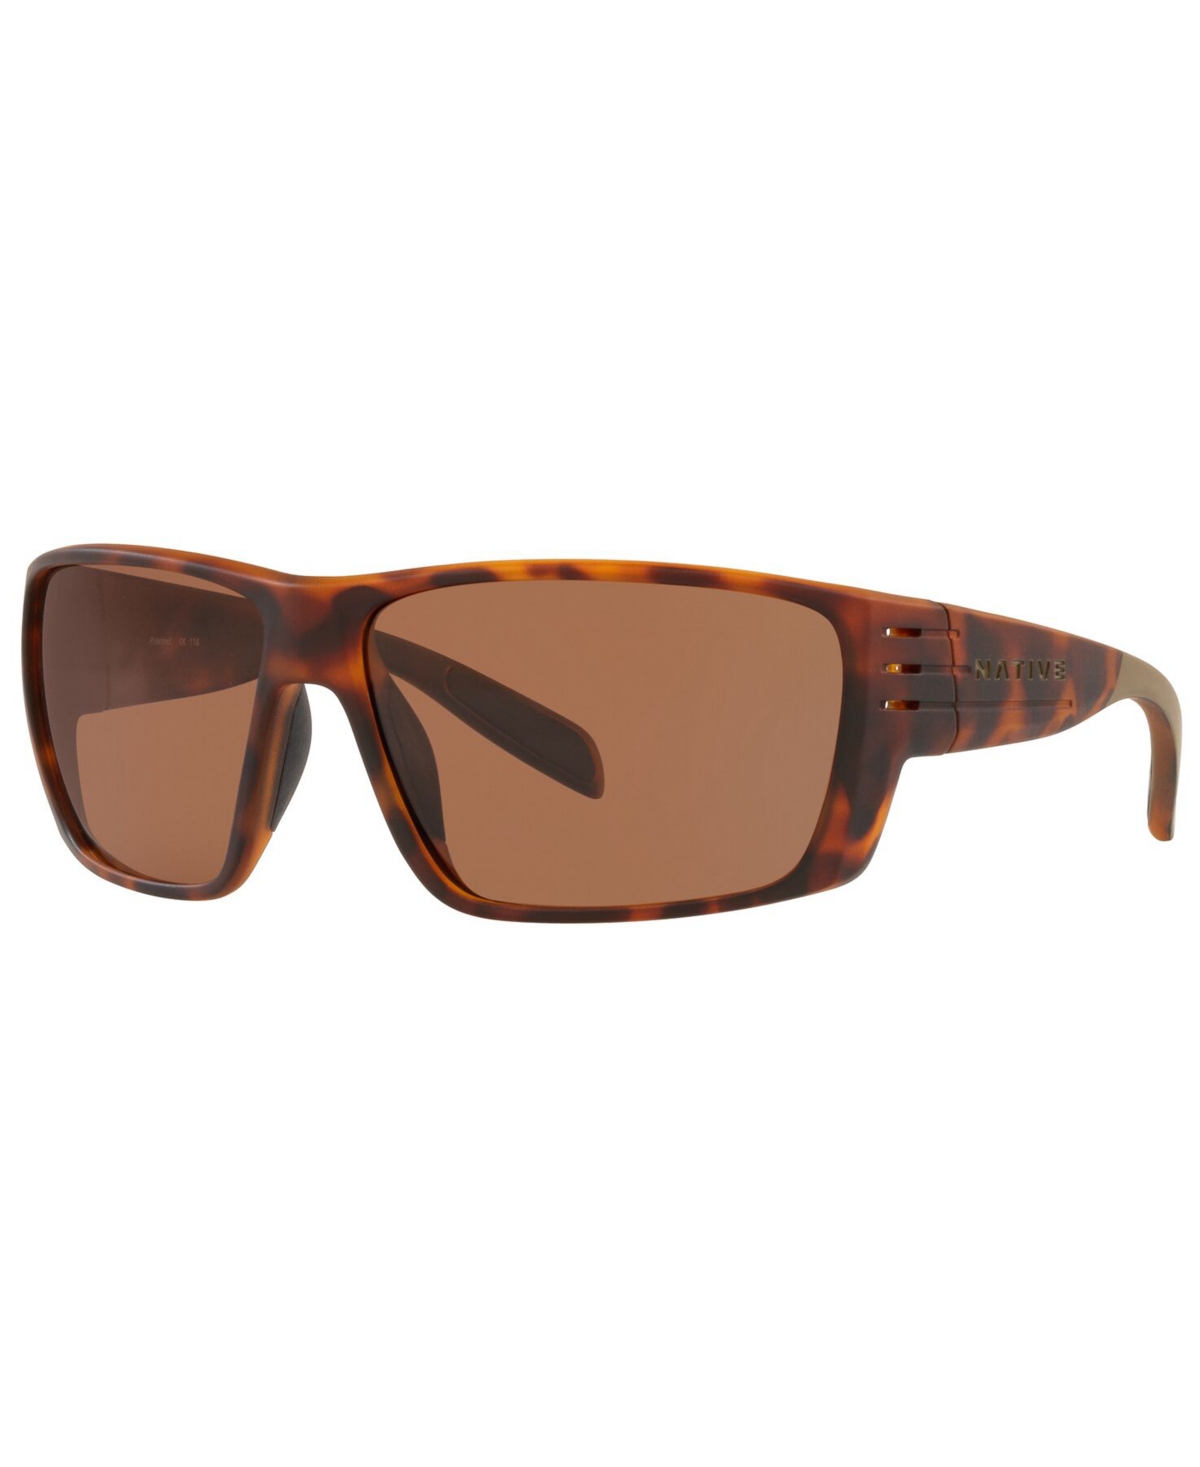 Native Eyewear Native Men's Polarized Sunglasses, Xd9014 66 In Desert Tortoise,tan,brown